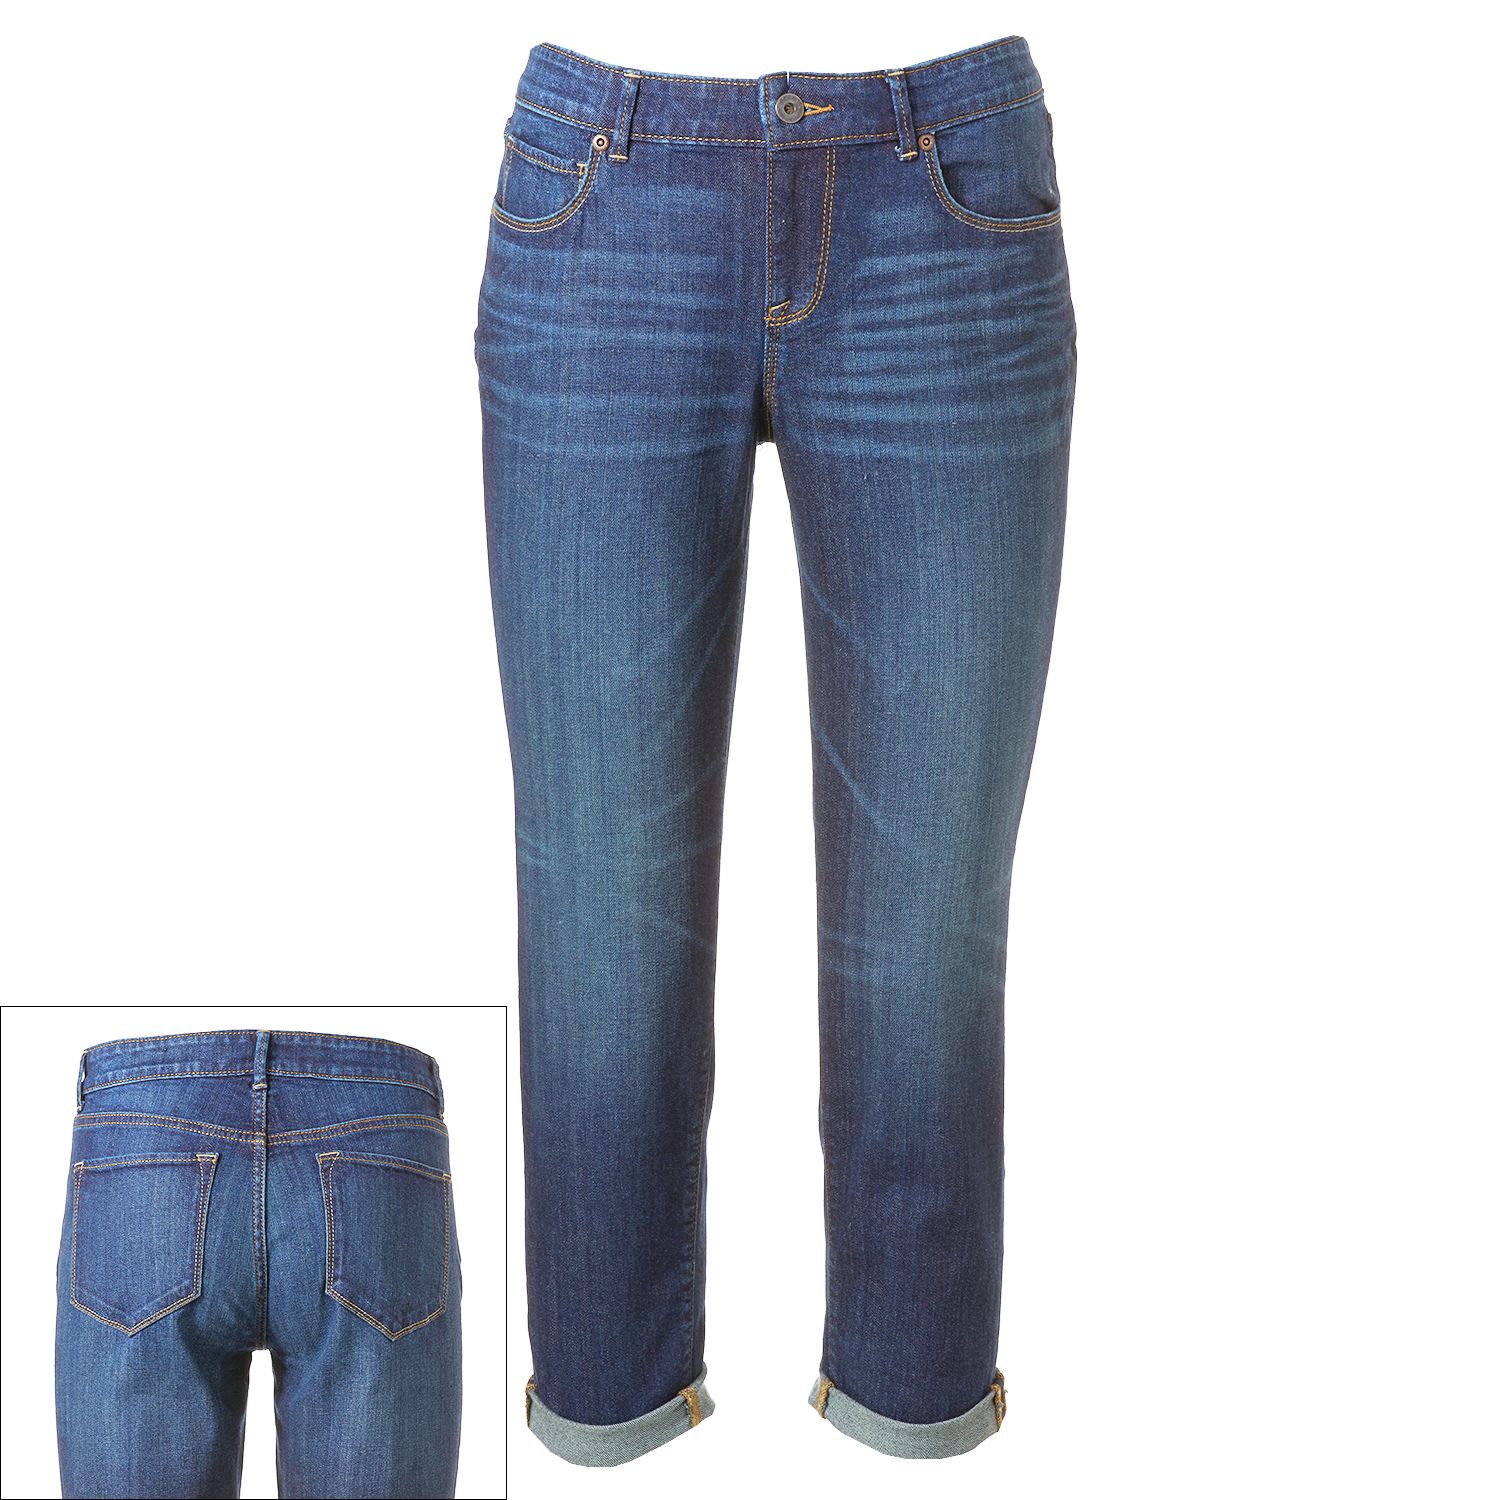 kohl's brand jeans